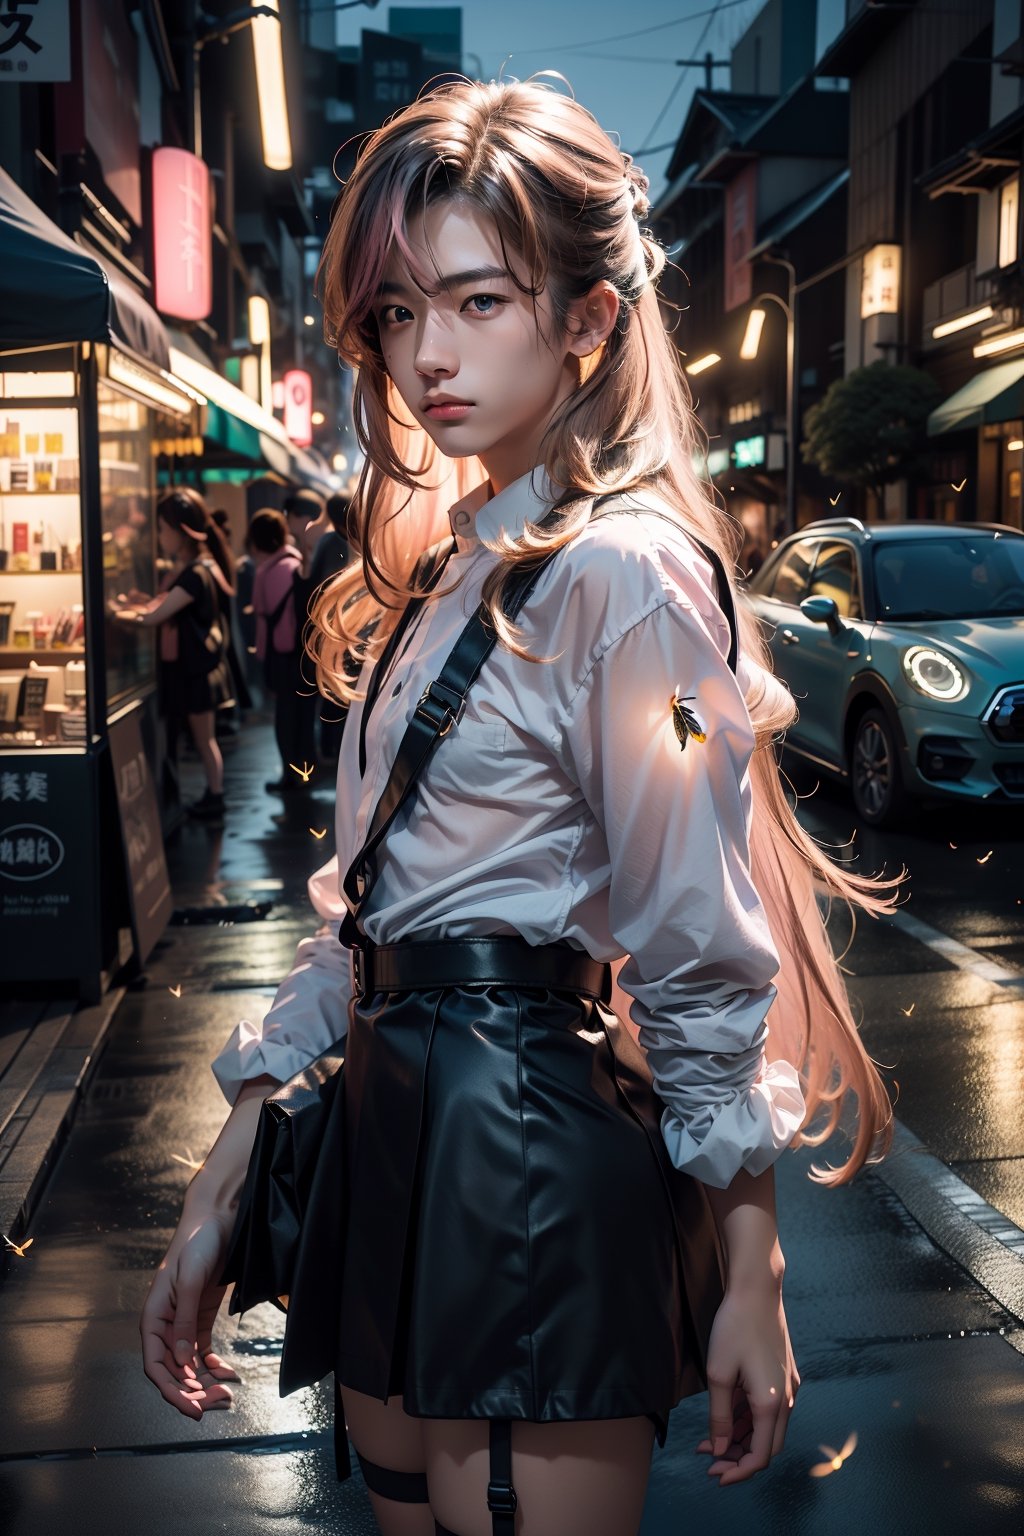  1 japanese man, male face , at night in the city ,cute man ,blue eyes and a pink long hair , kawaii , wearing mini skirt, harness, side bag, stockings BREAK,firefliesfireflies